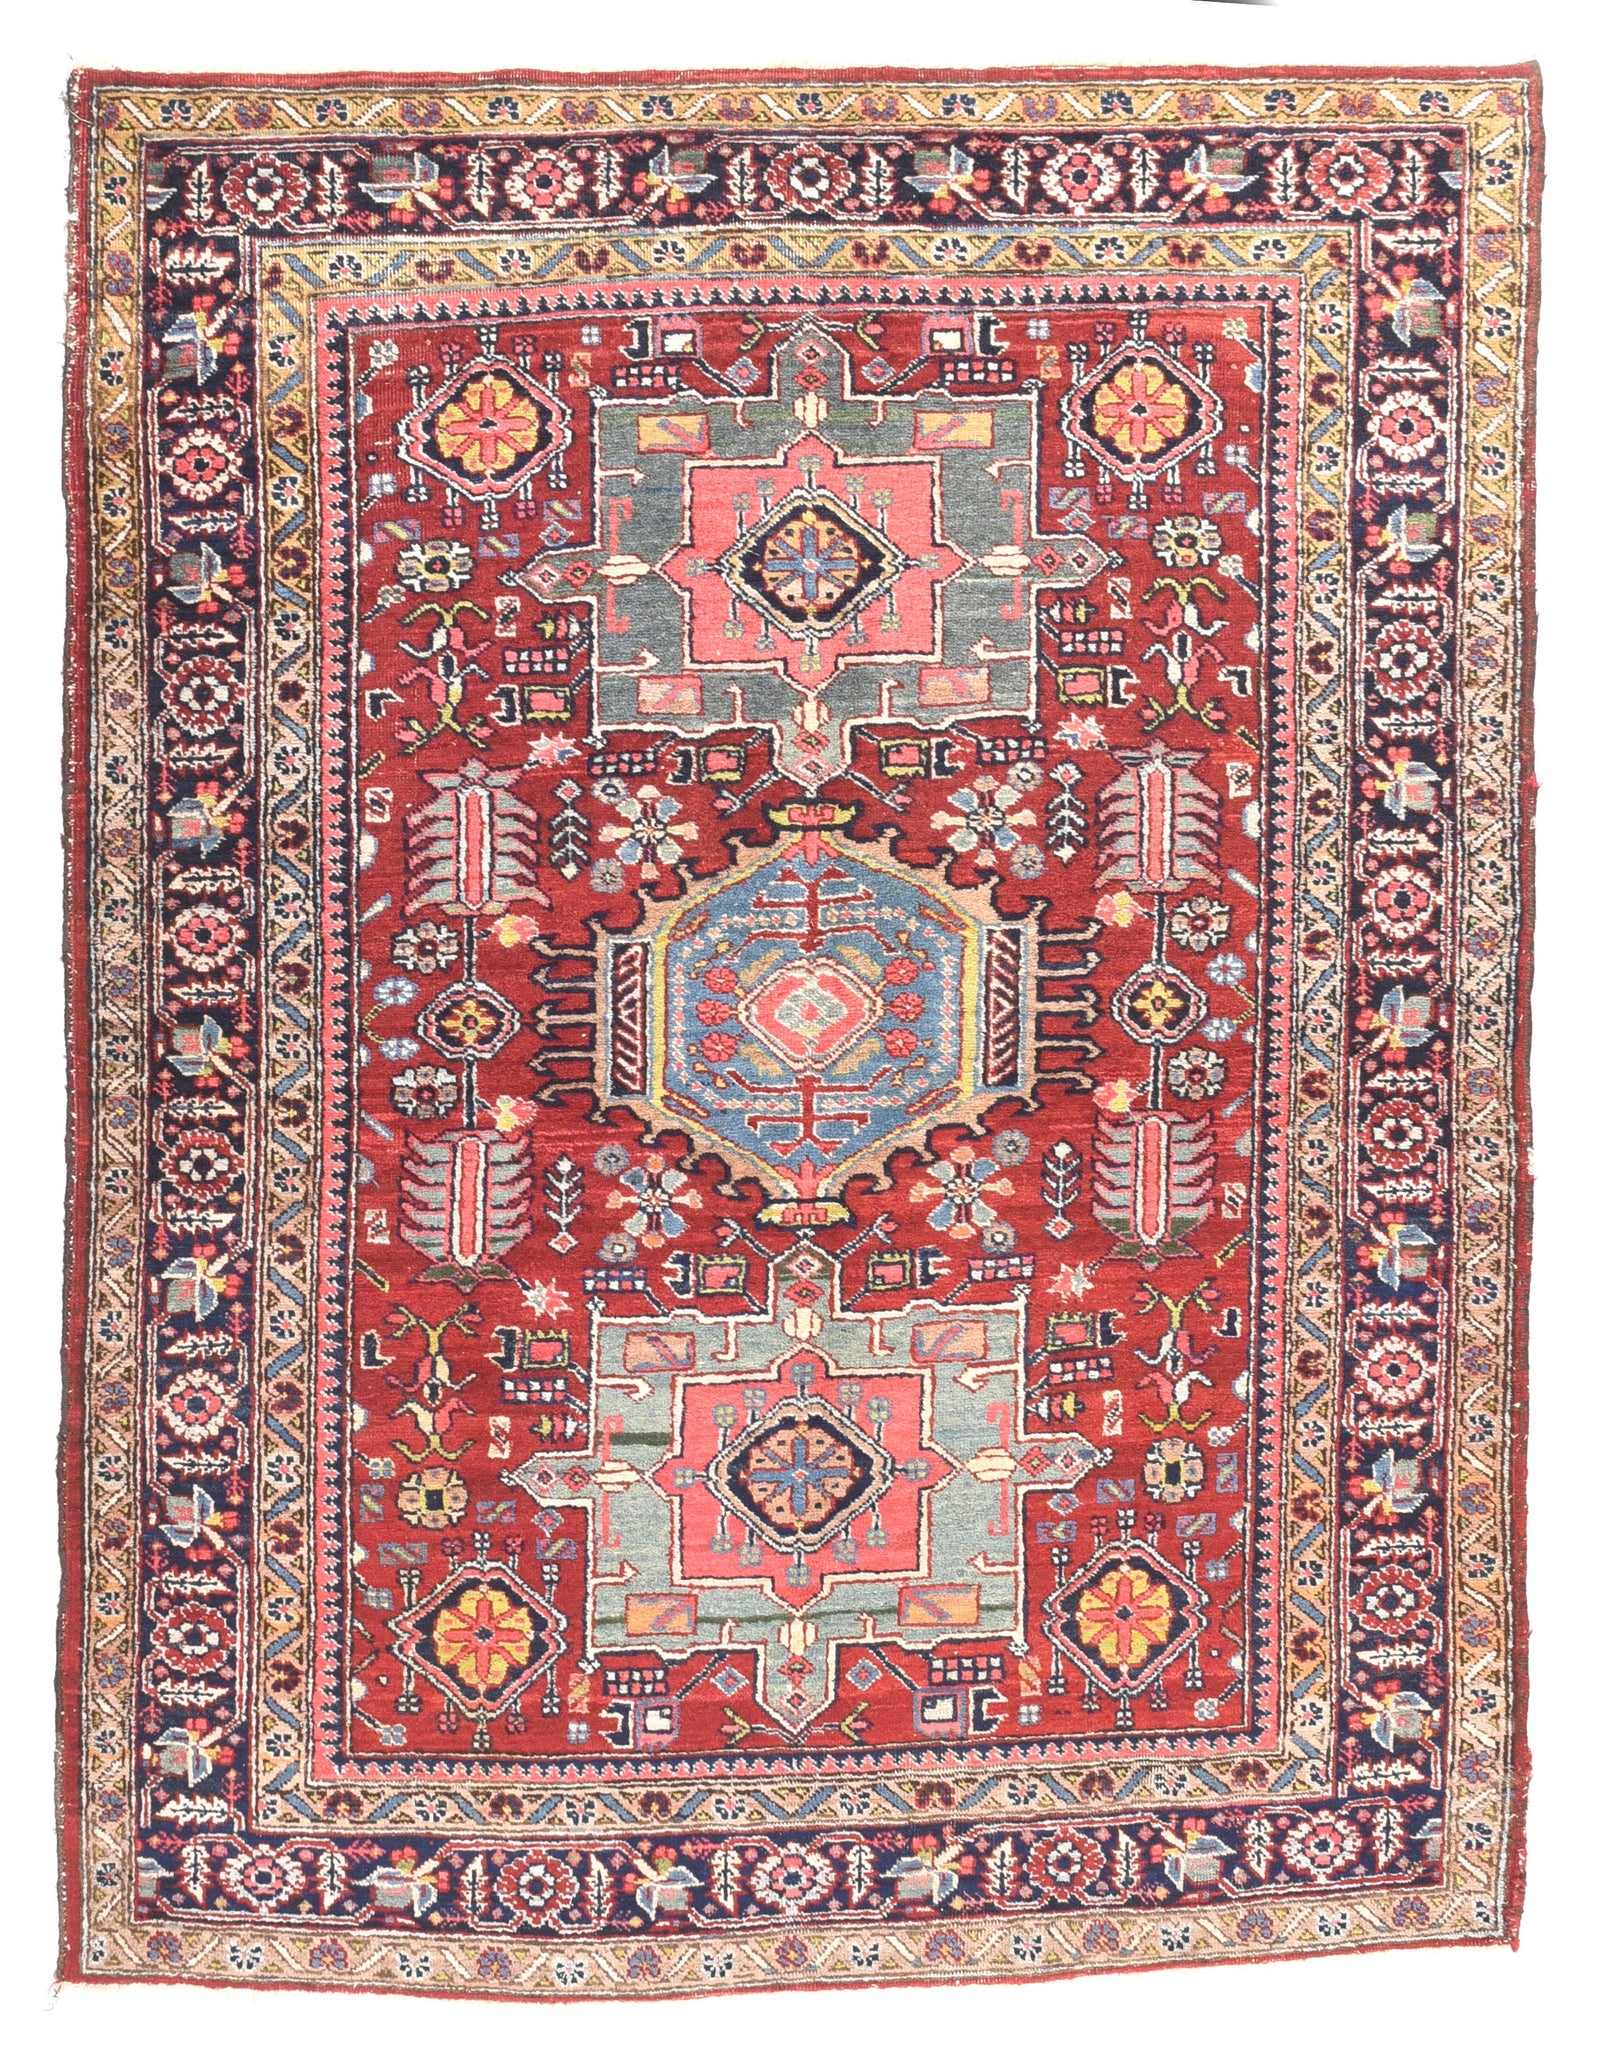 Antique Red Heriz Persian Area Rug